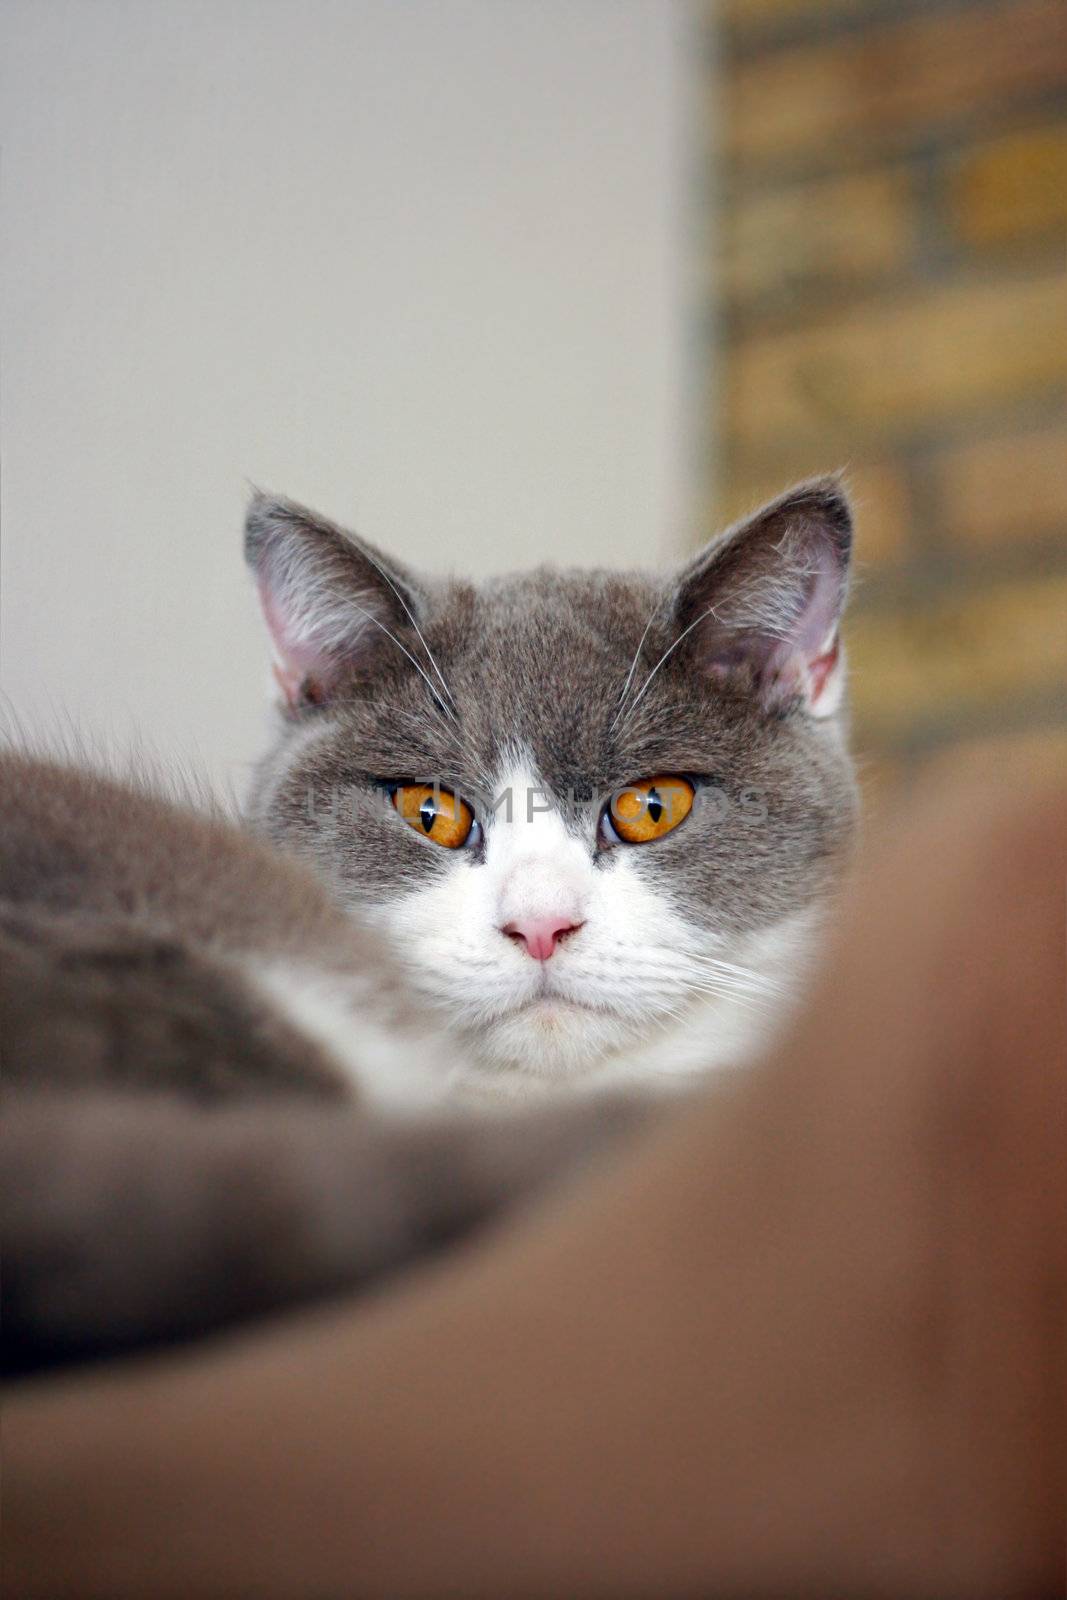 Grey and white British shorthair cat with orange eyes